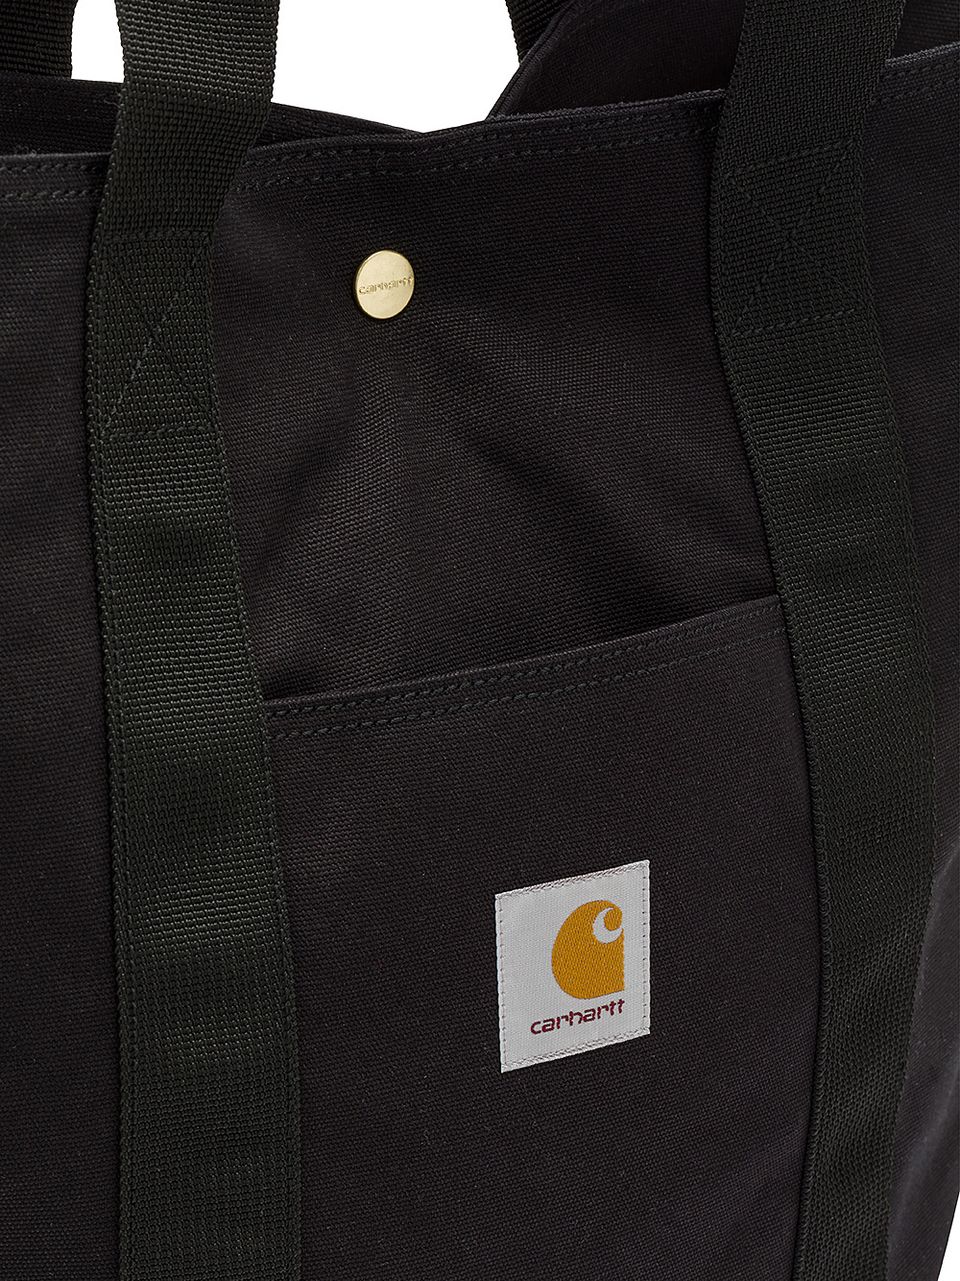 Bag with logo